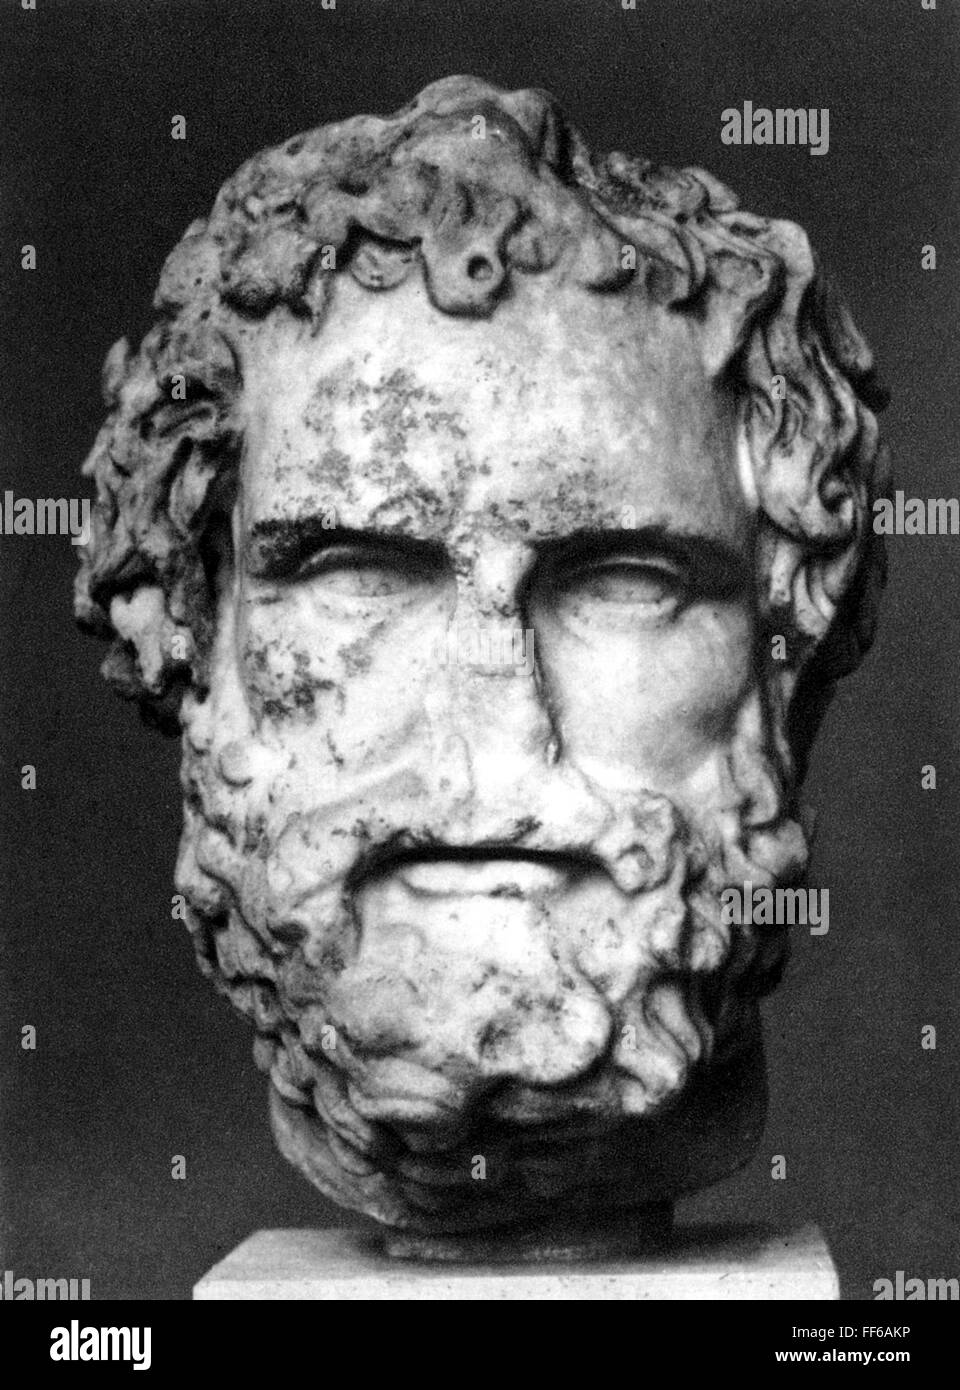 THALES OF MILETUS /n(640?-546 B.C.). Greek philosopher and scientist. Antique Greek sculpture. Stock Photo